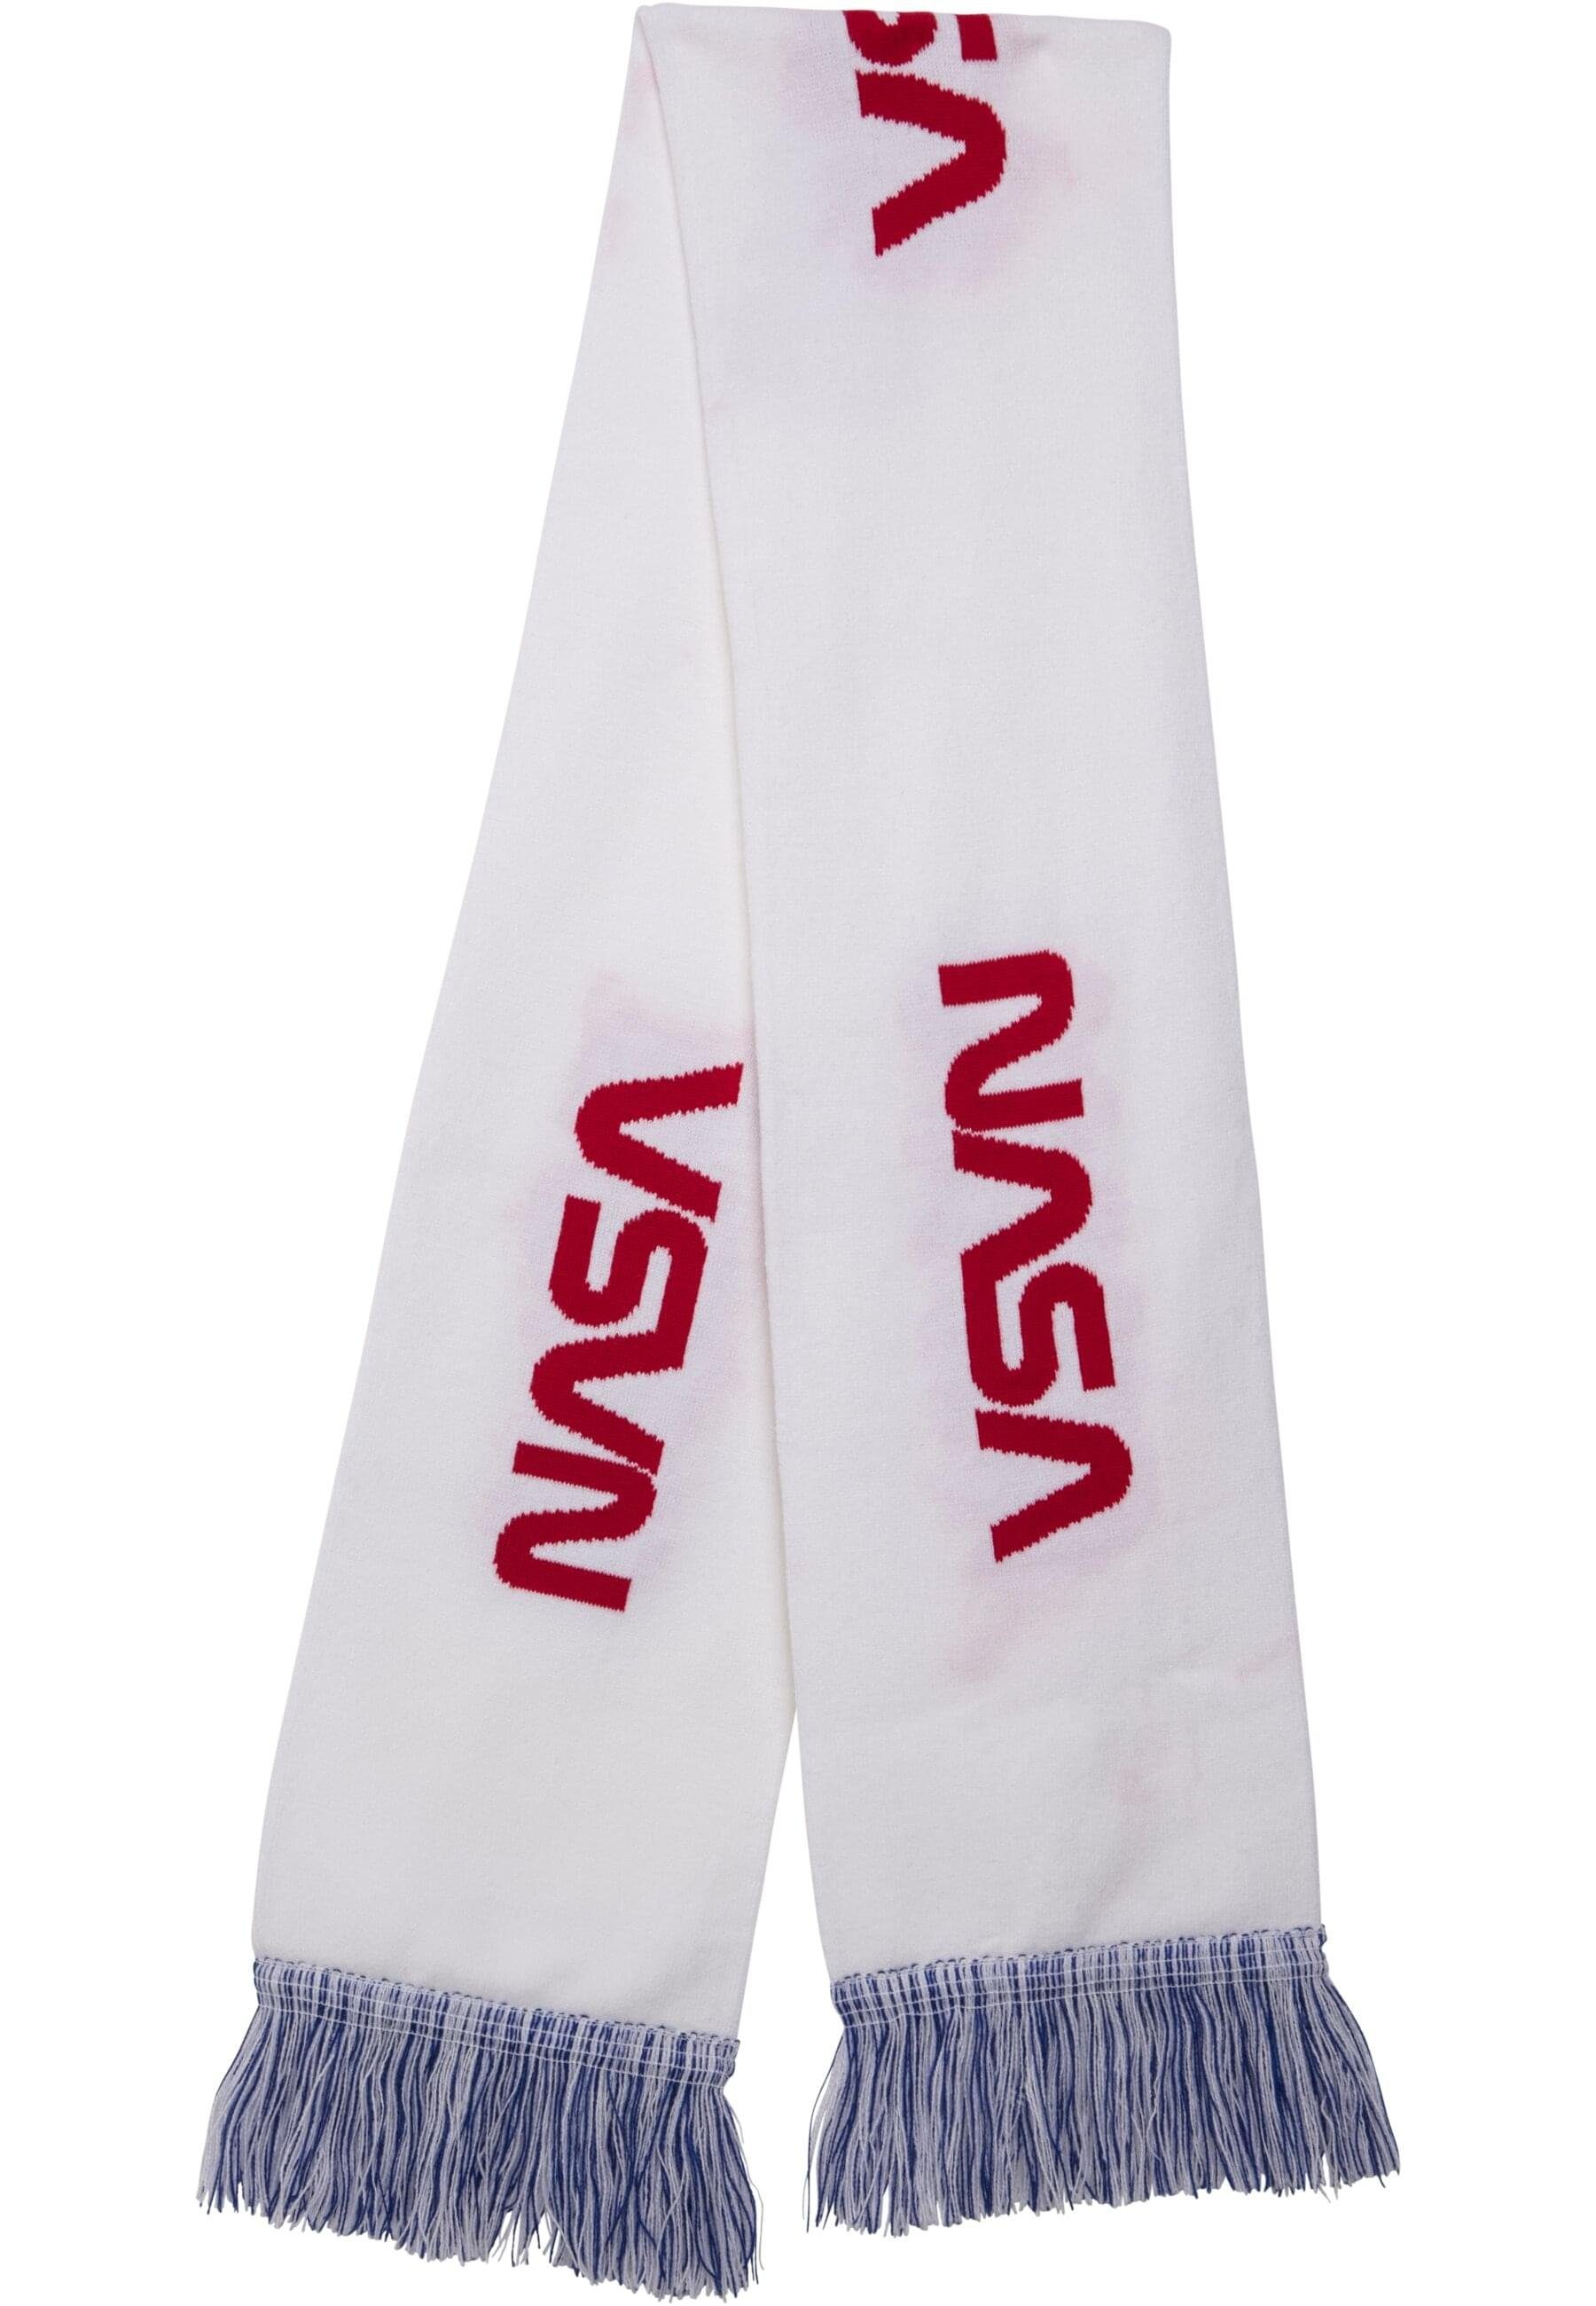 MisterTee Schal Unisex (1-St) Knitted, NASA Scarf white/blue/red